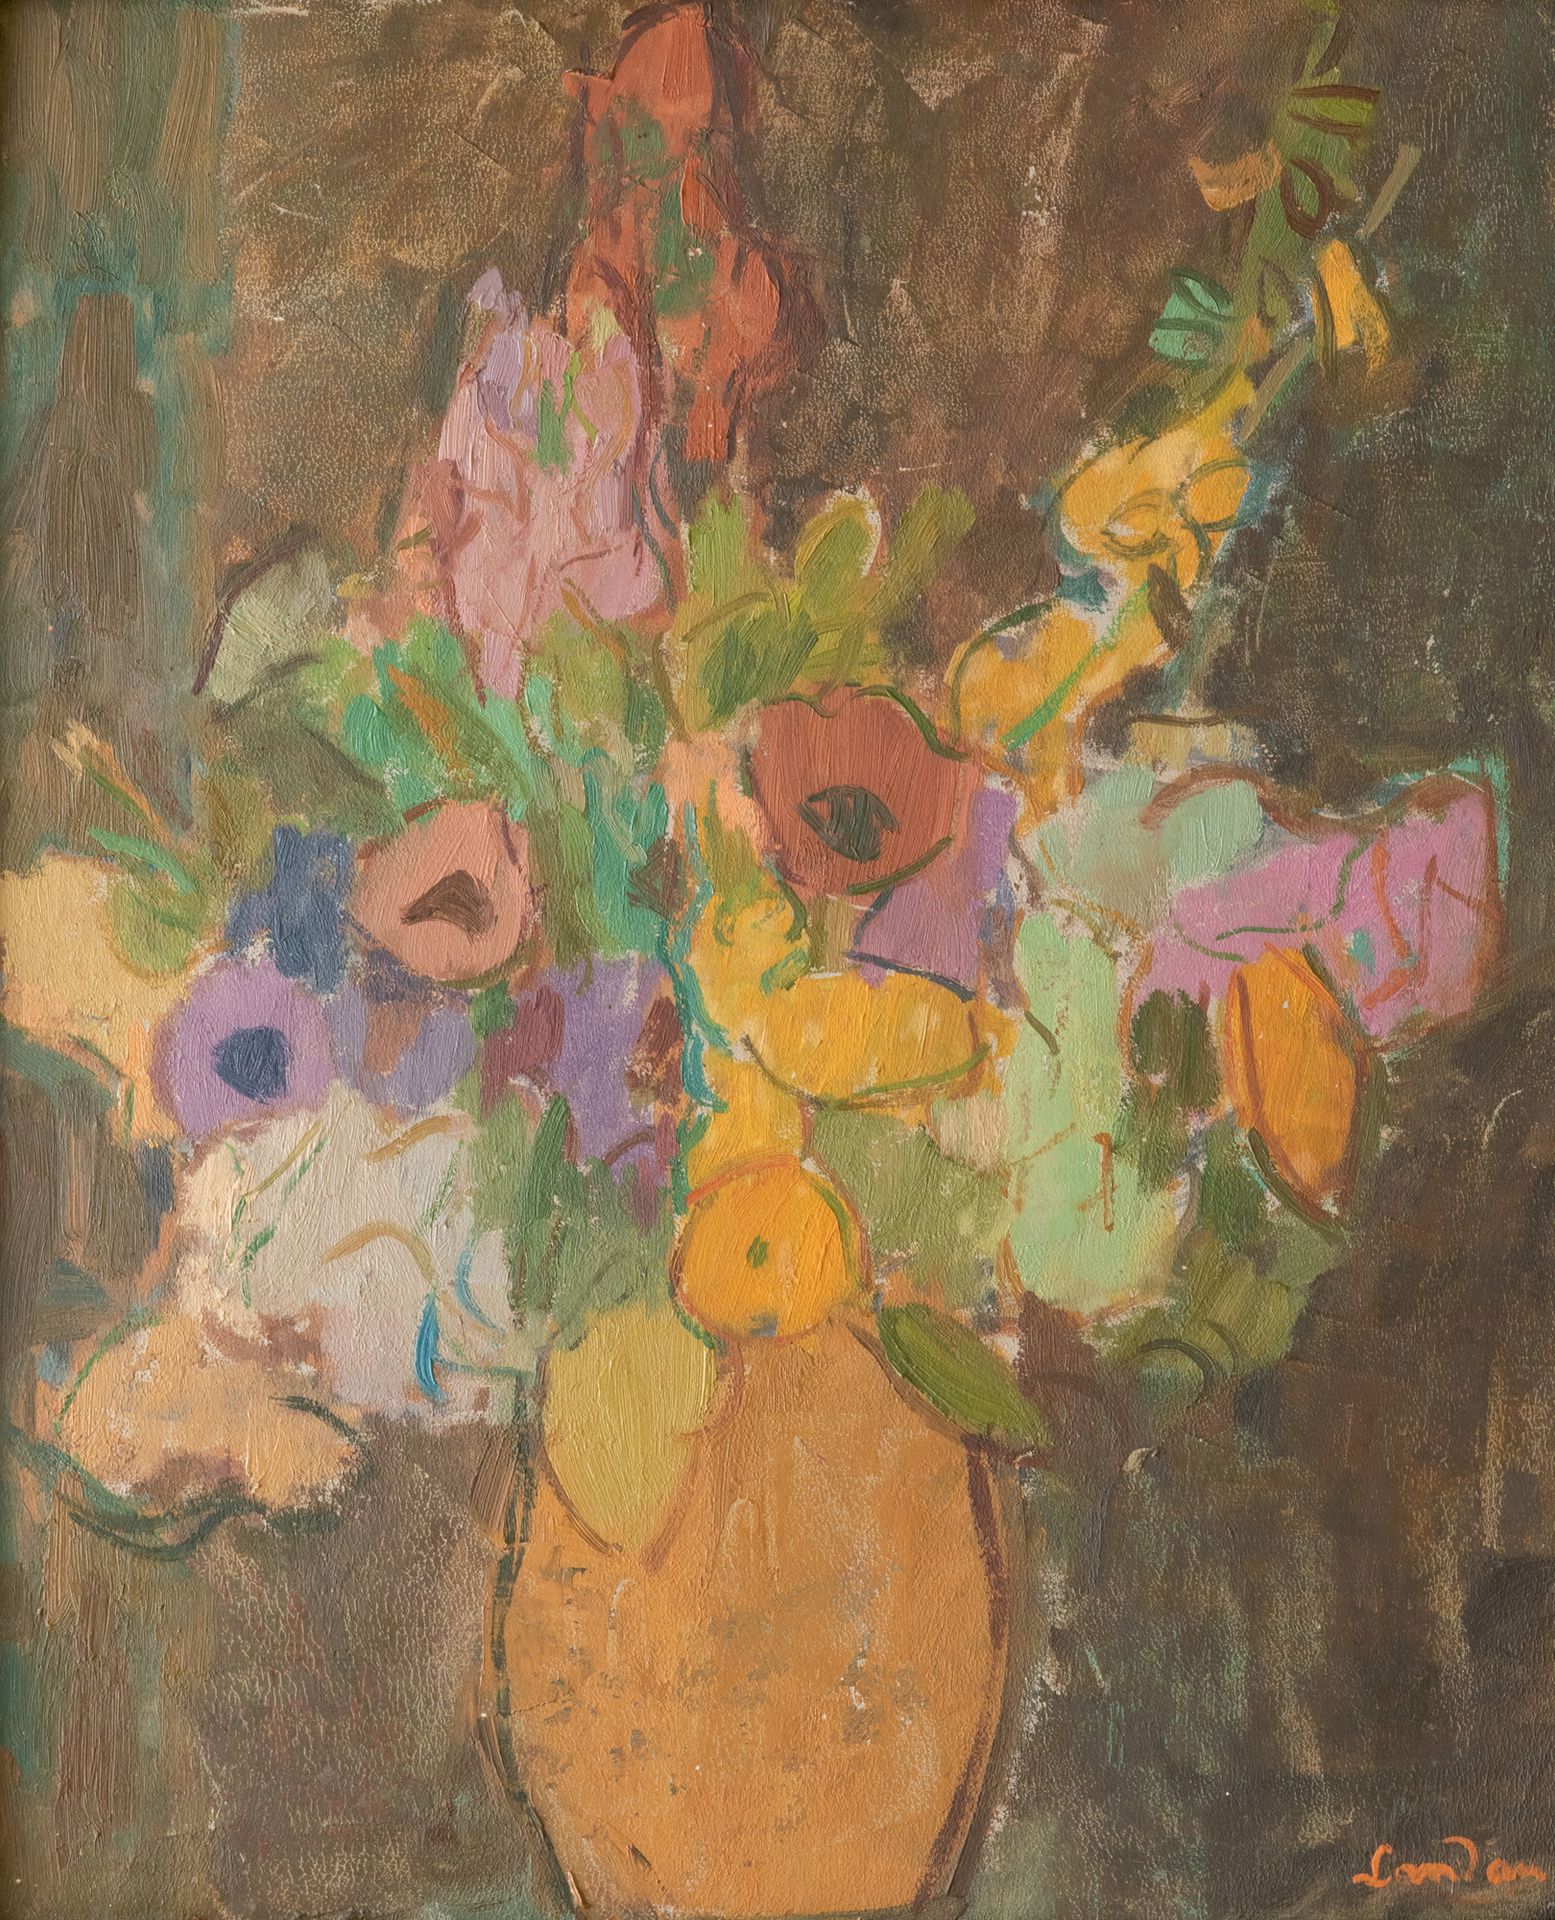 Sigmund (Zygmunt) LANDAU (1898-1962) 花束
木板油画（略微扭曲），右下角签名 46 x 38 cm